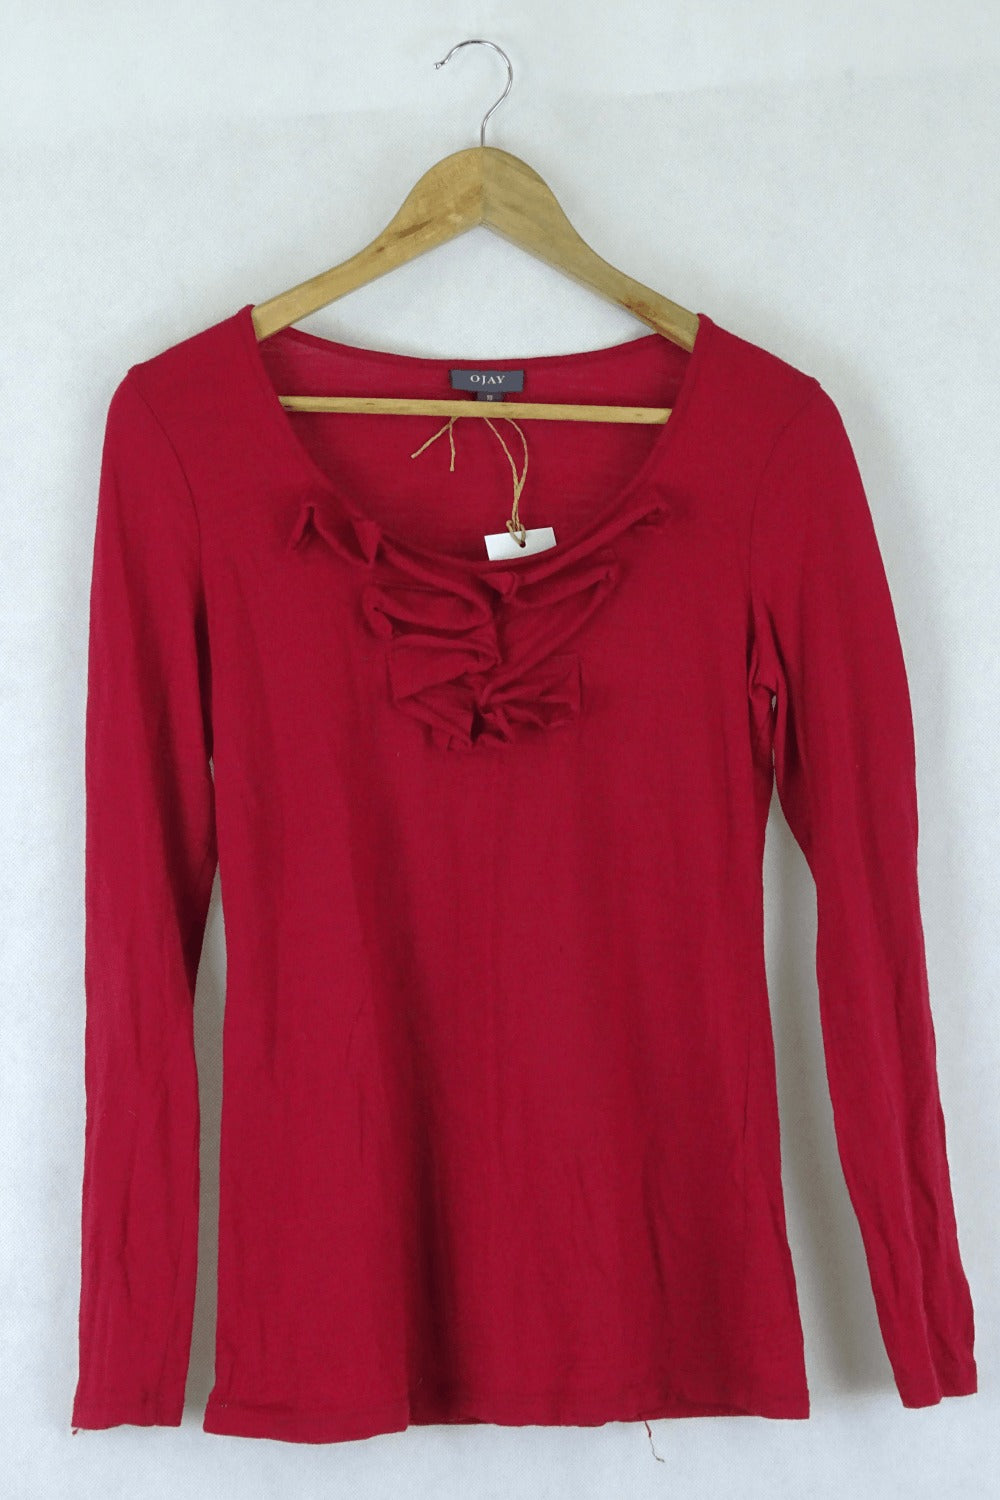 Ojay Red Shirt 10